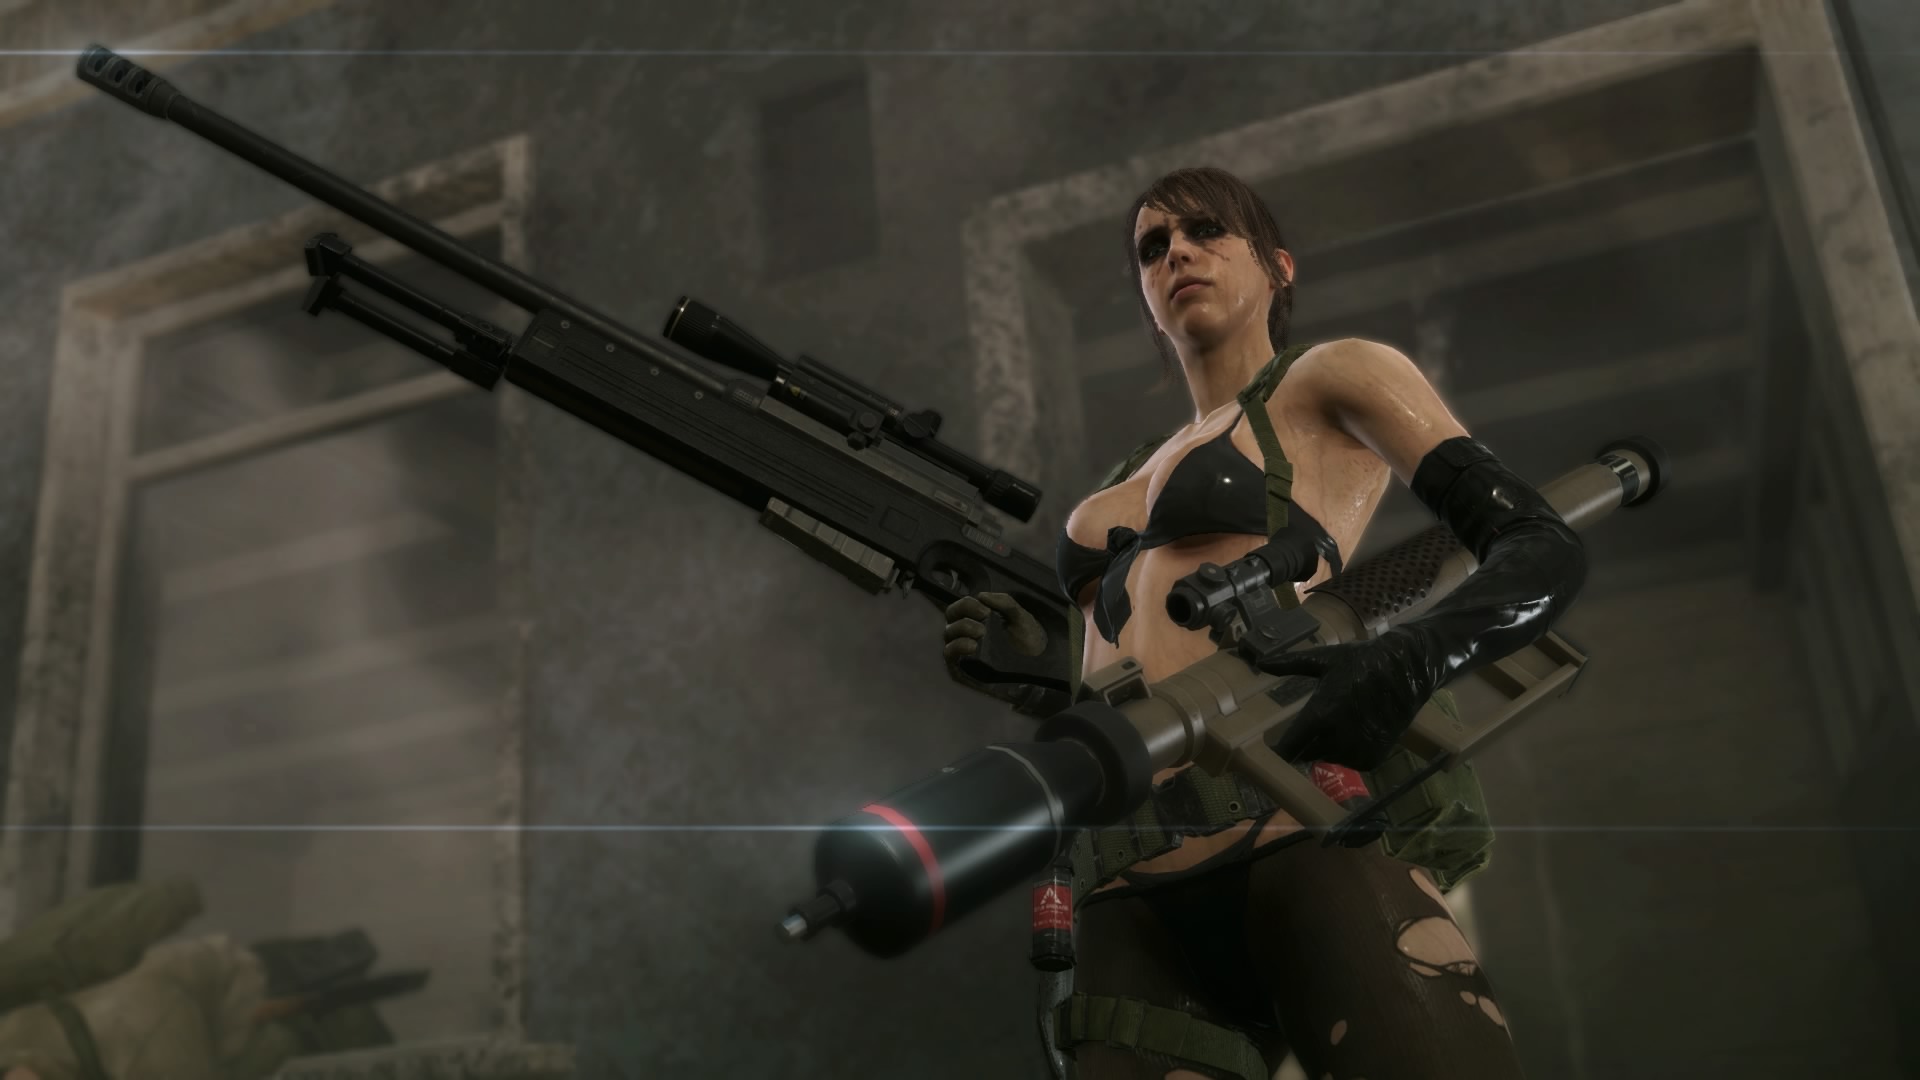 Metal Gear Solid V The Phantom Pain Quiet Stefanie Joosten Sniper Rifle Female Soldier Video Games 1920x1080